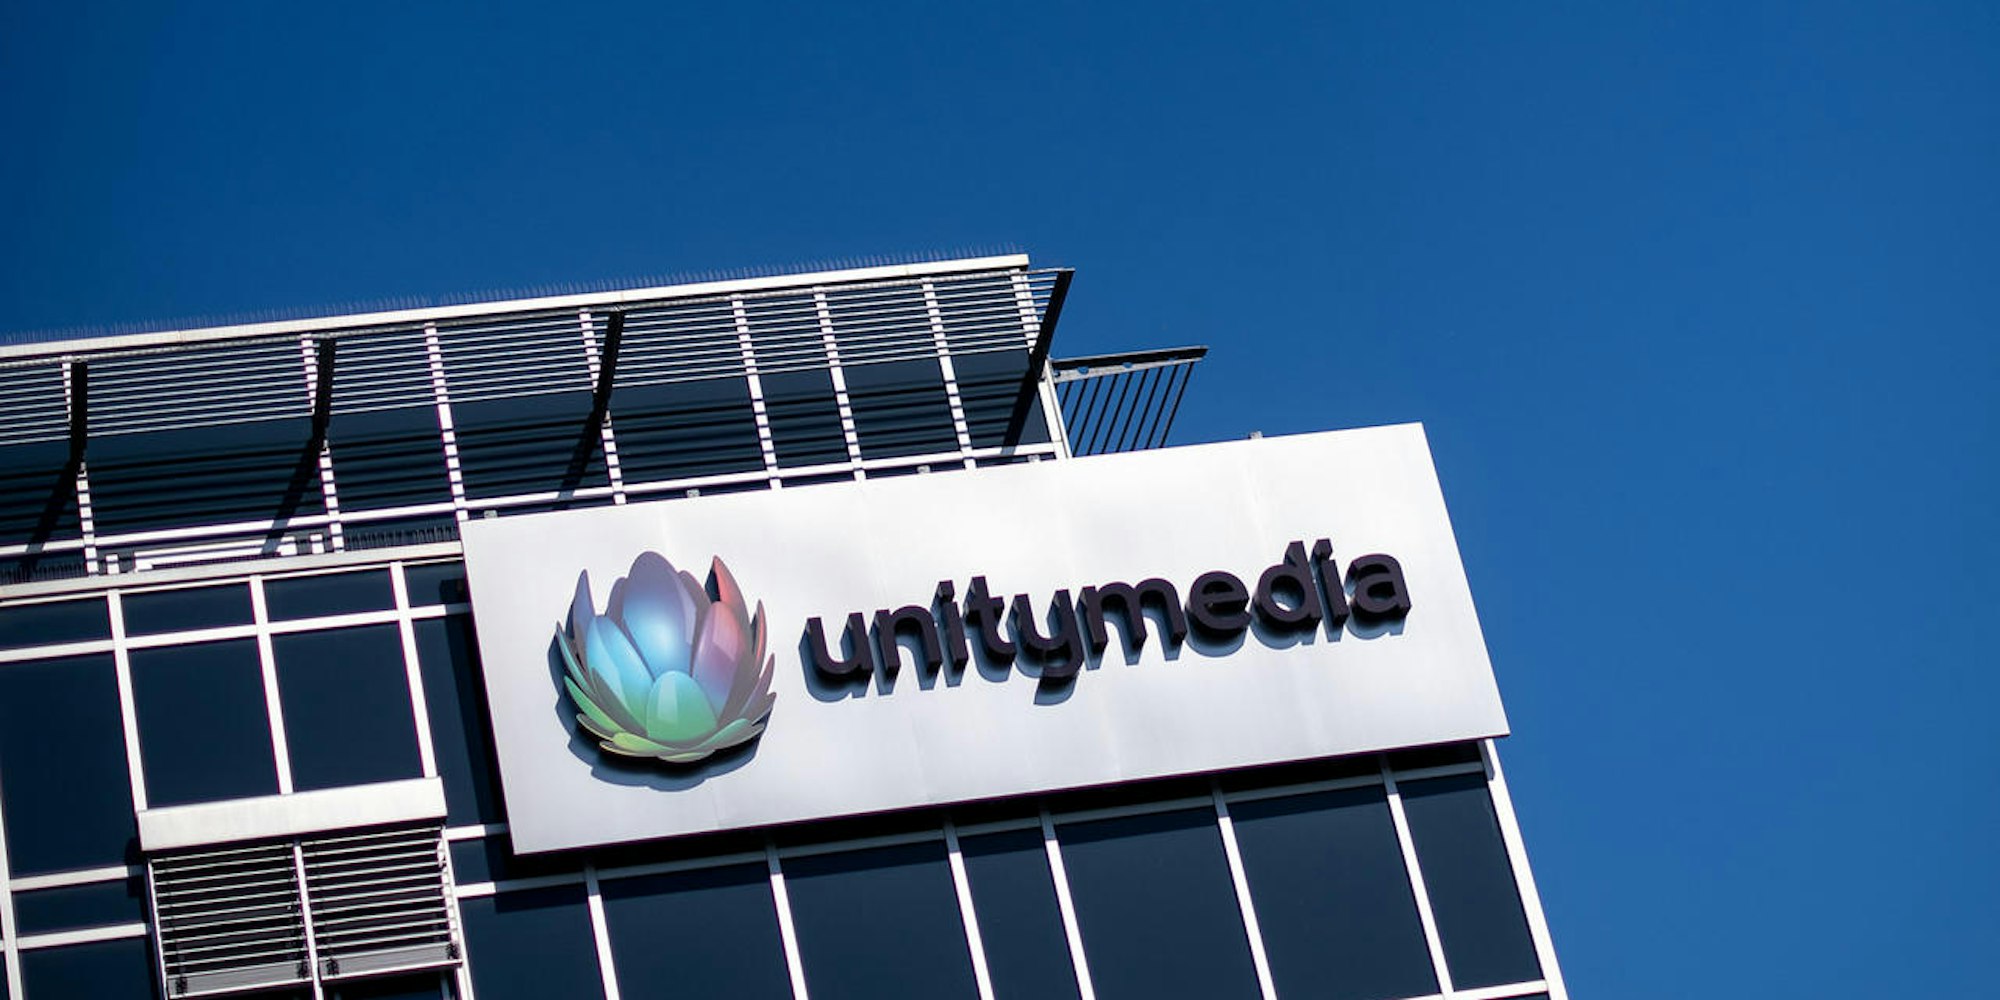 Unitymedia-Zentrale